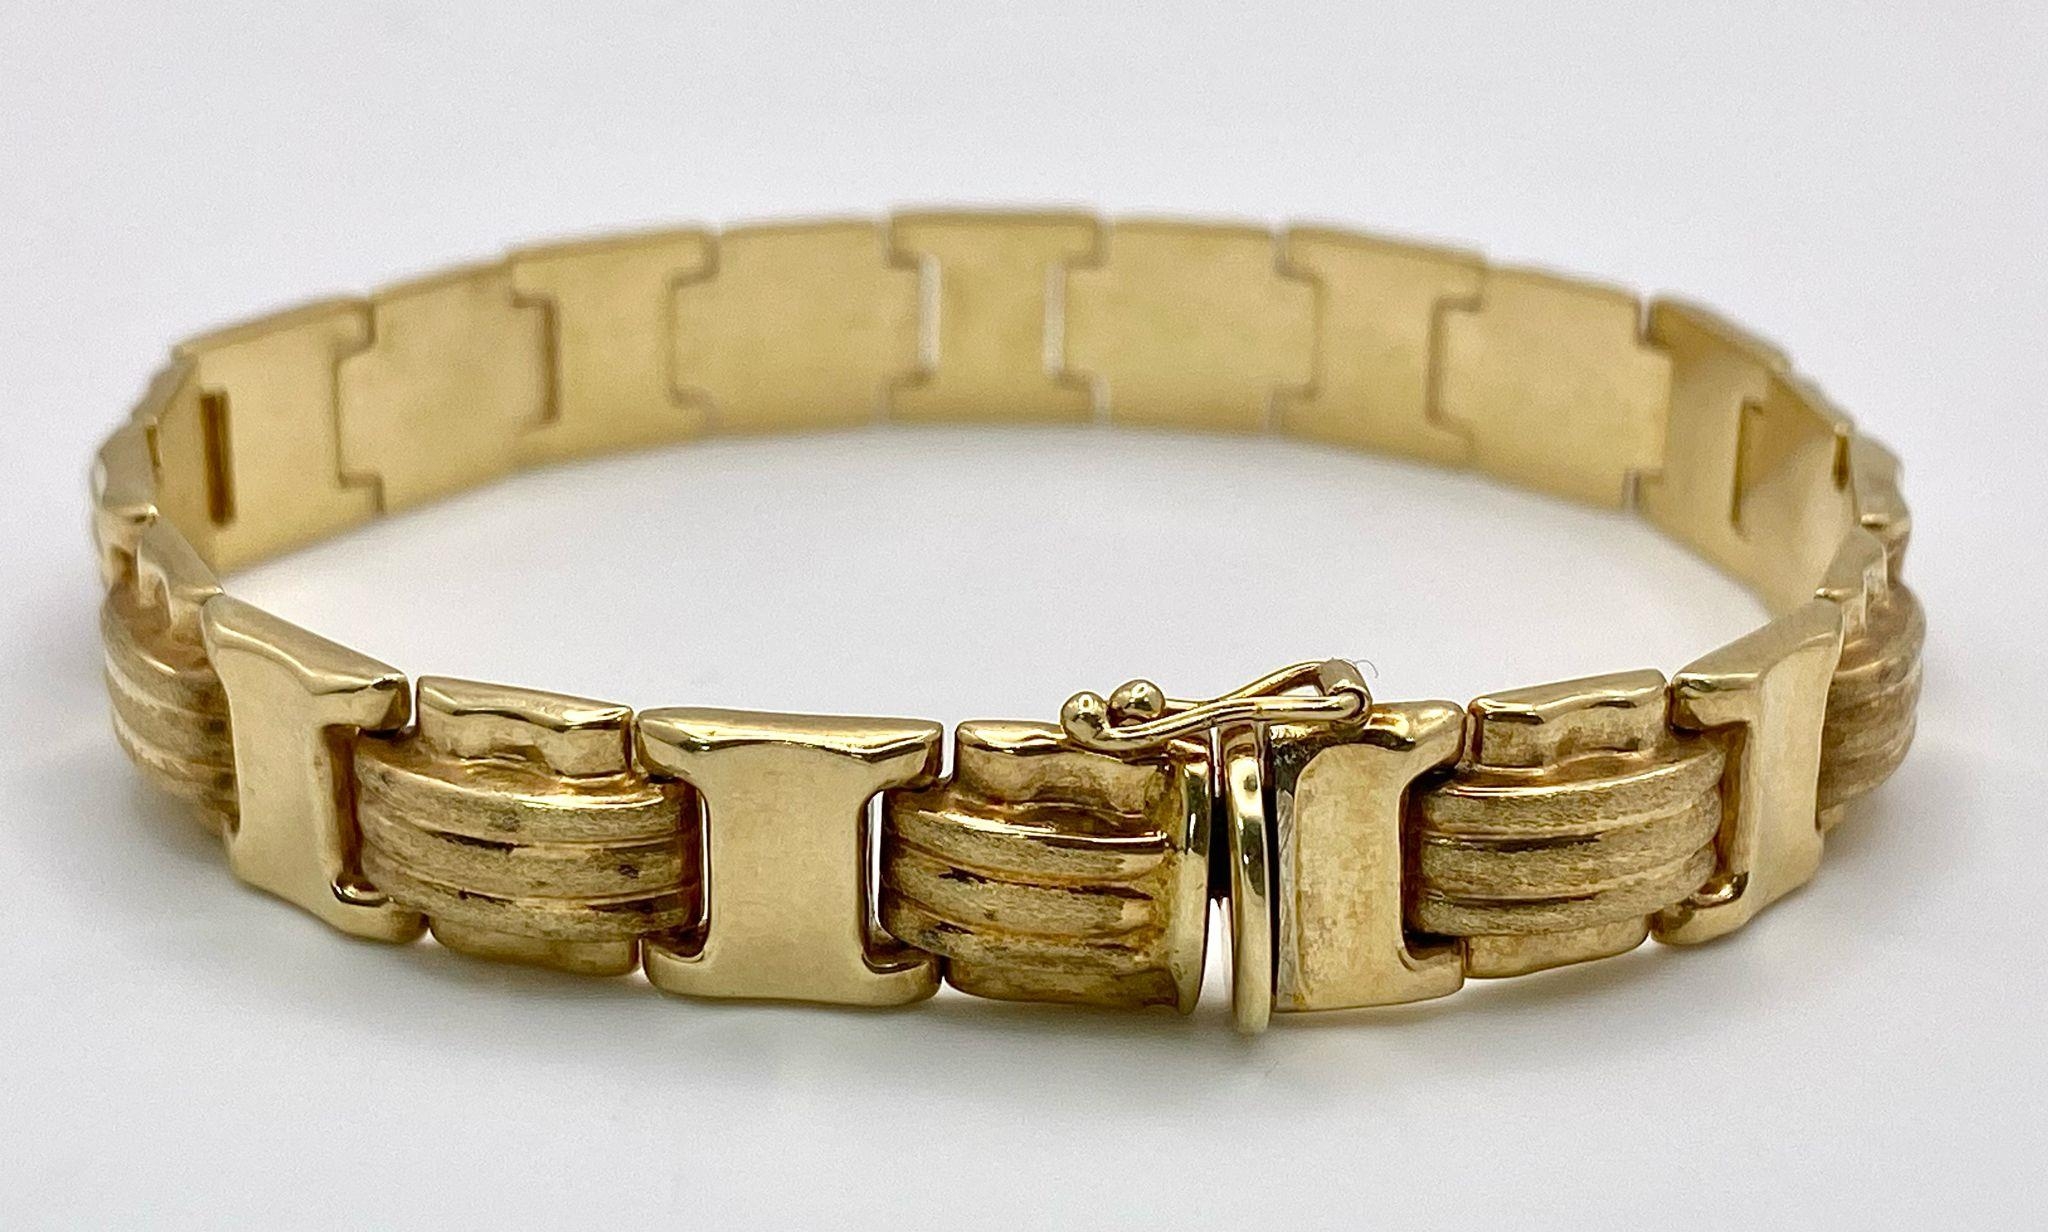 A Stylish 14K Yellow Gold Belt Buckle Link Bracelet. 18cm. 13.9g weight. - Image 3 of 4